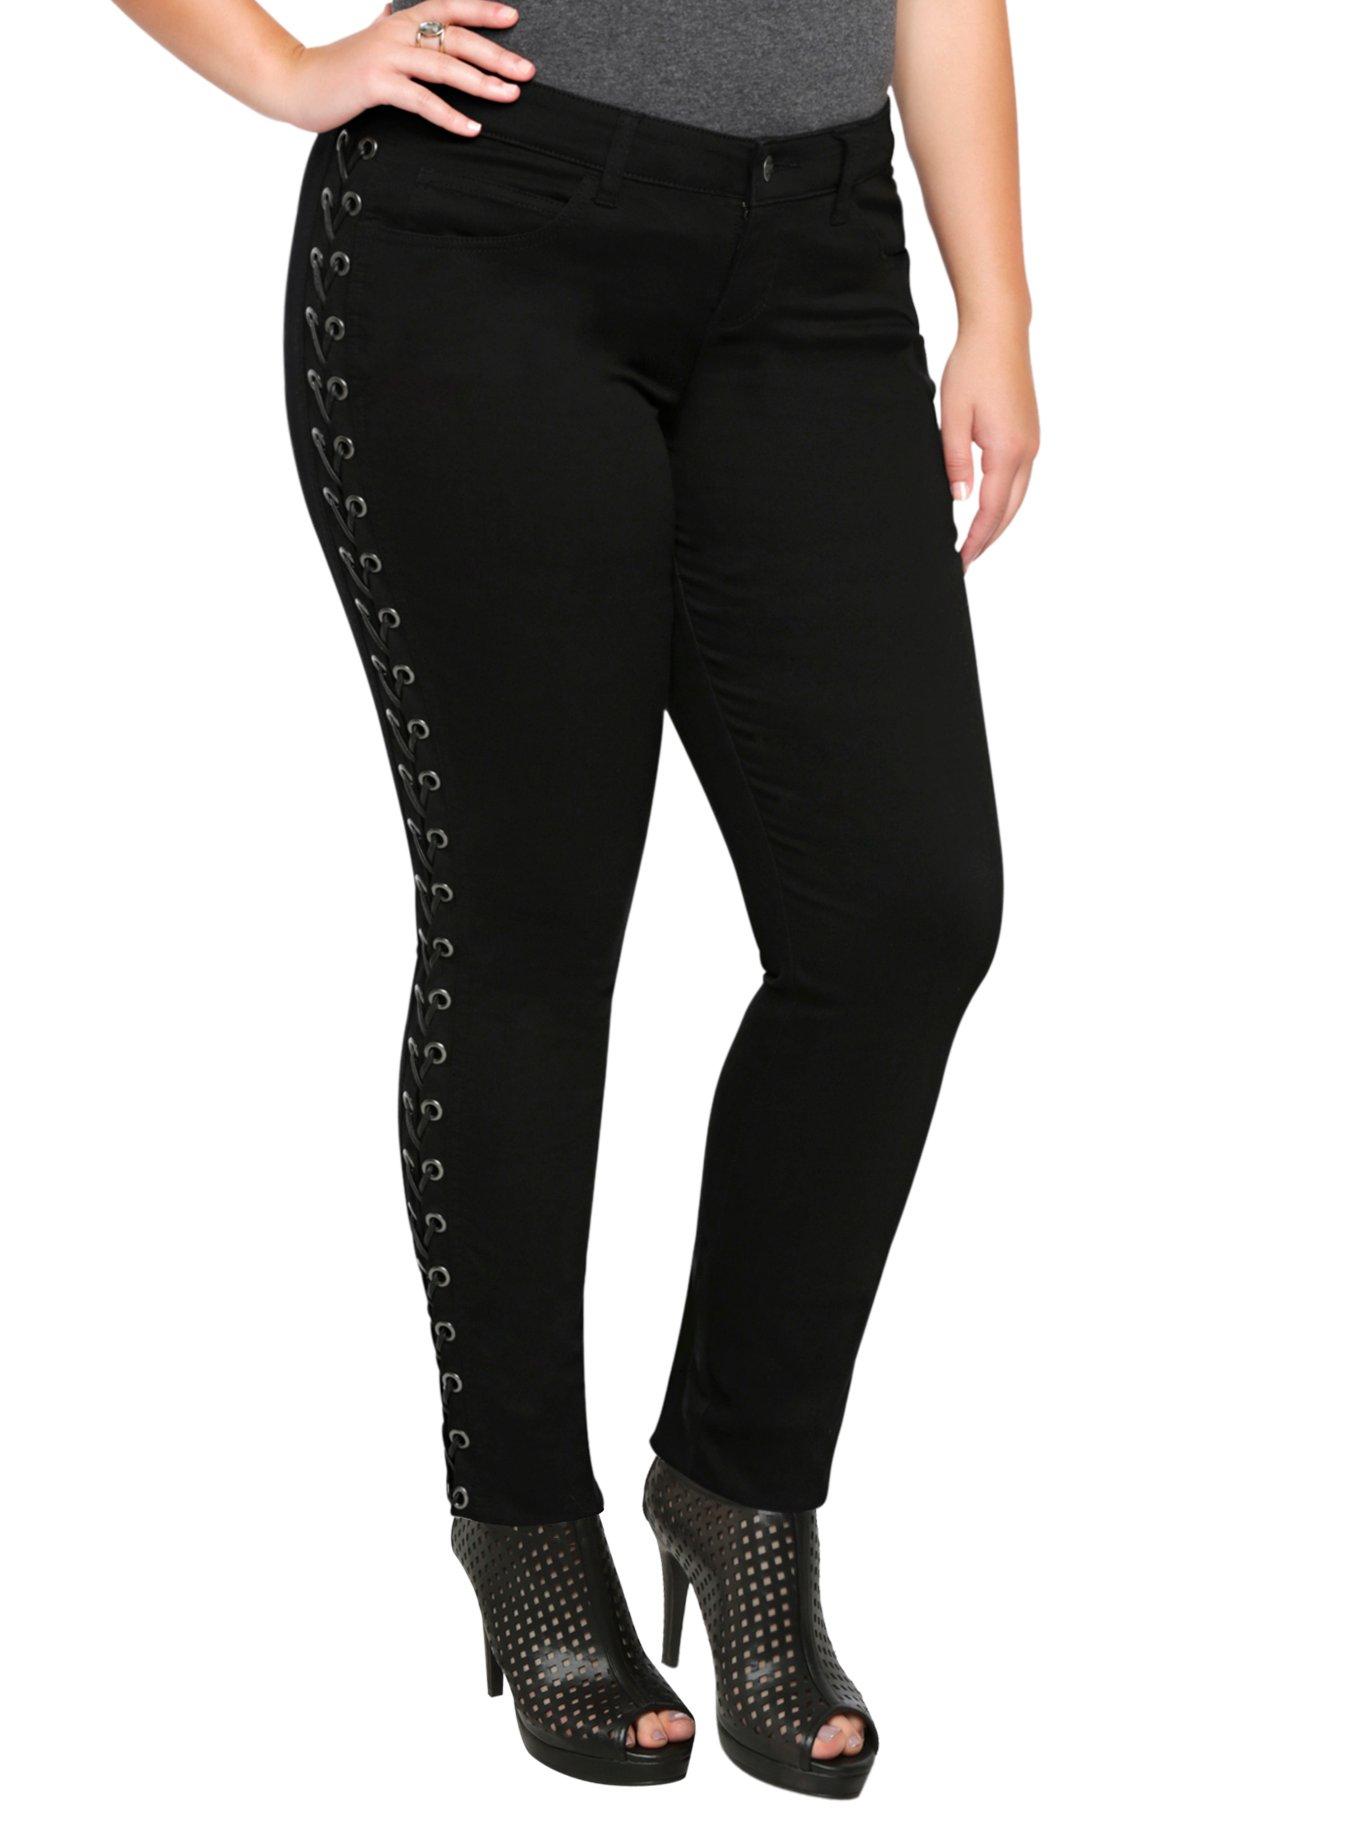 Hot Topic Tripp NYC Black Lace Up Denim Jeans Pants Juniors Size 1